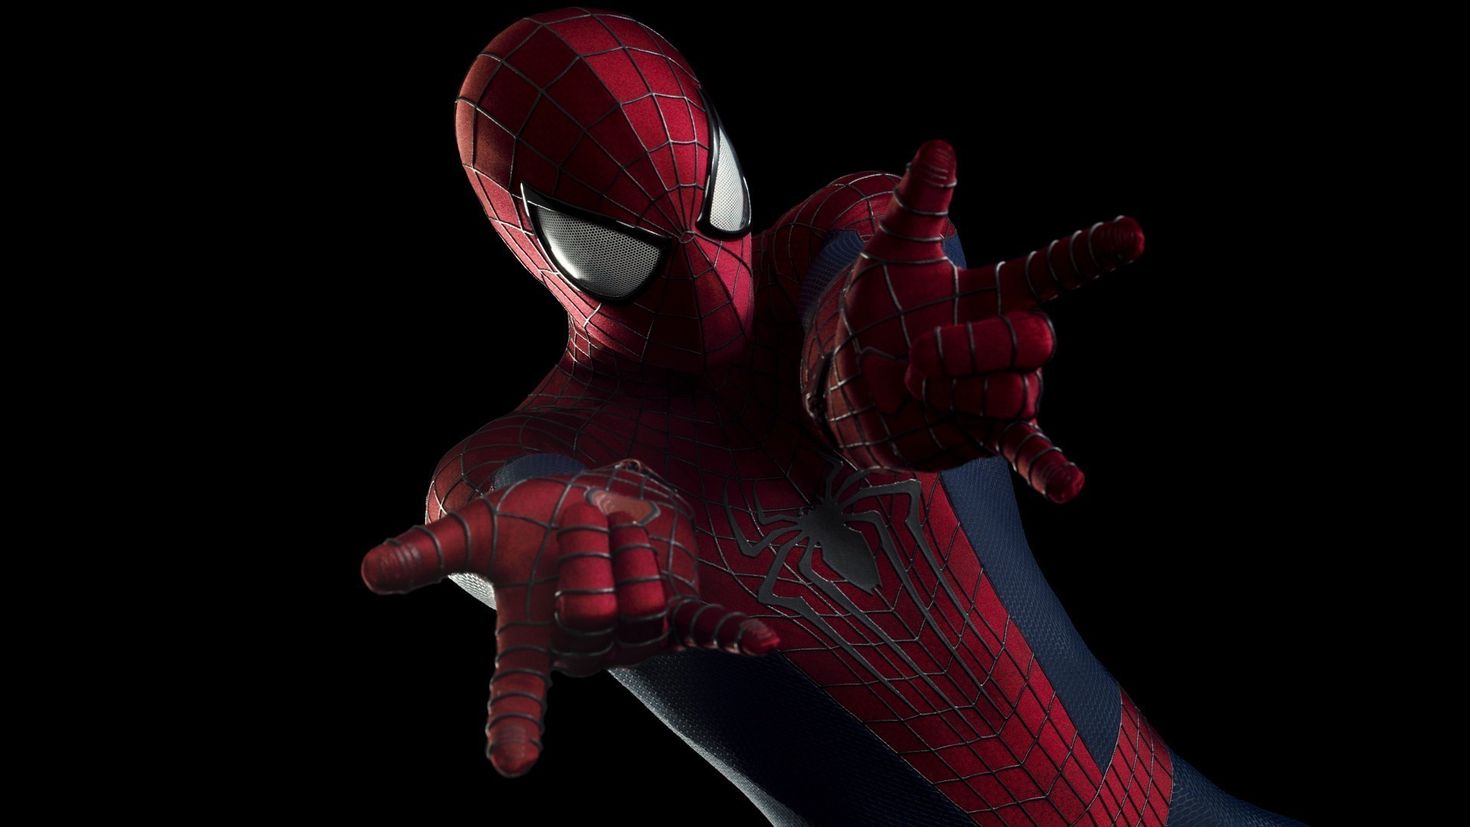 Включи человек паук паутина. Кьюбайт человек паук. Кьюбайт the amazing Spider man 2. Обои человек паук. Человек паук картинки.